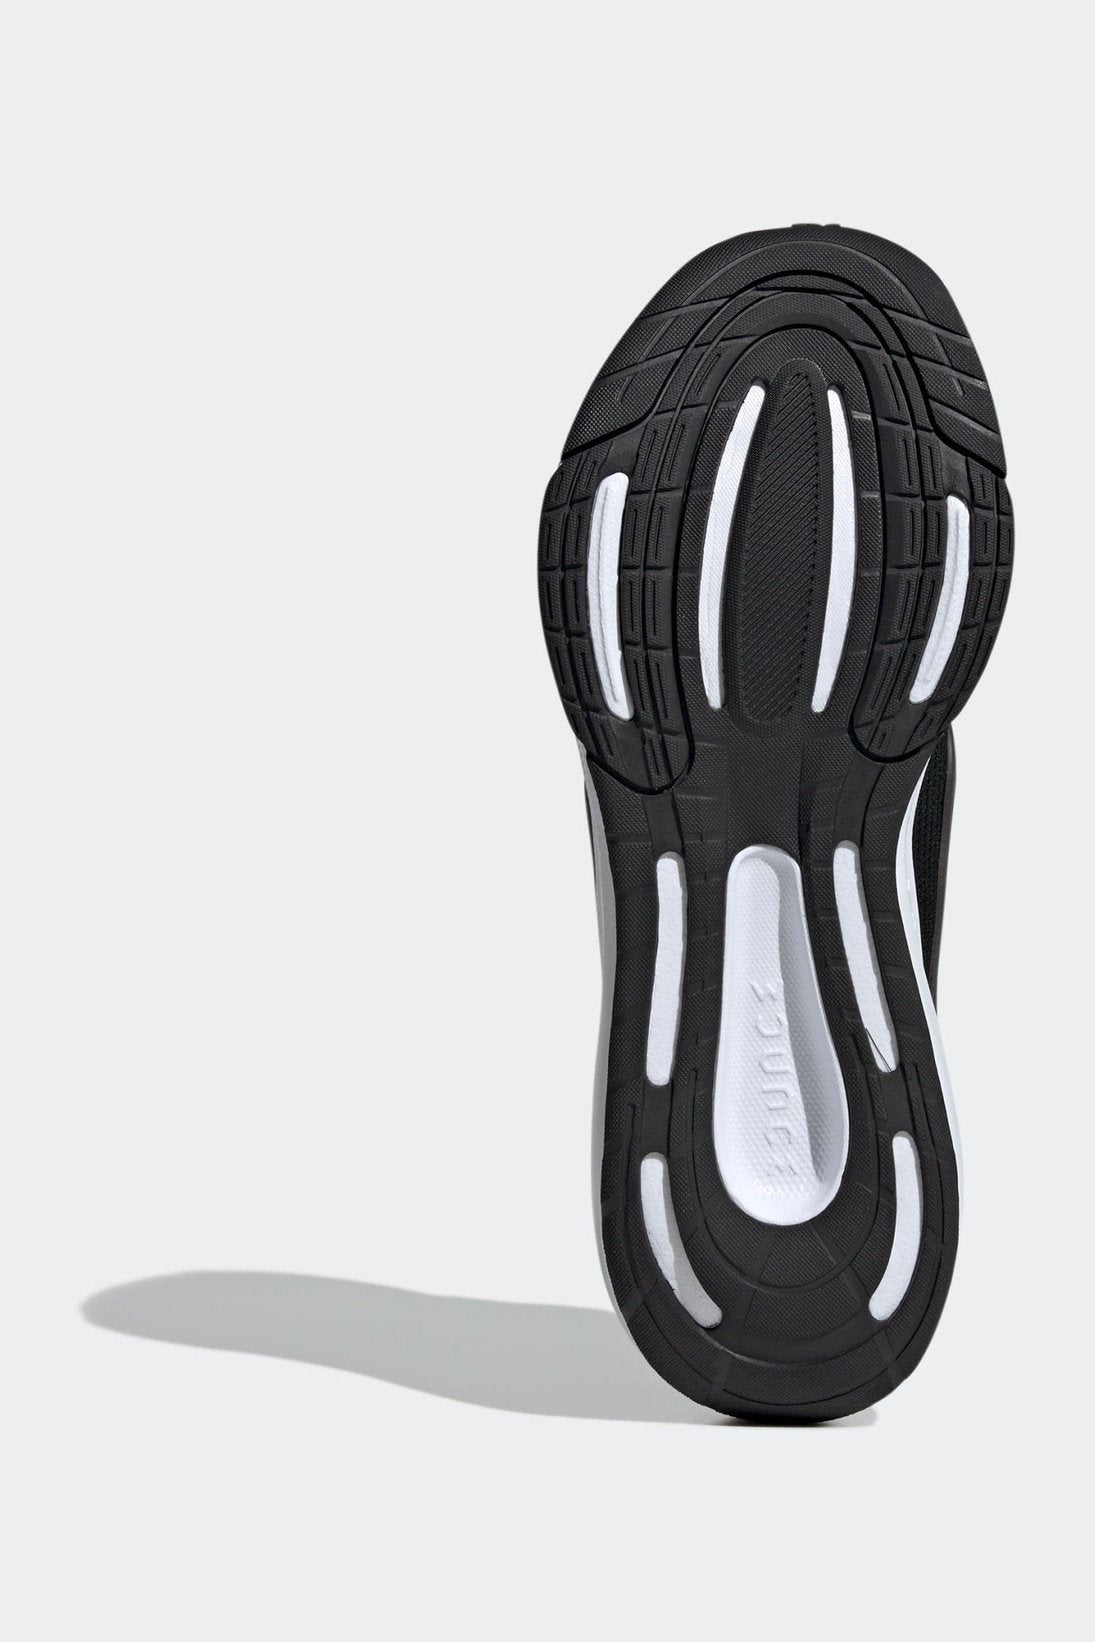 ADIDAS - נעלי ספורט לגברים ULTRABOUNCE בצבע שחור וזהב - MASHBIR//365